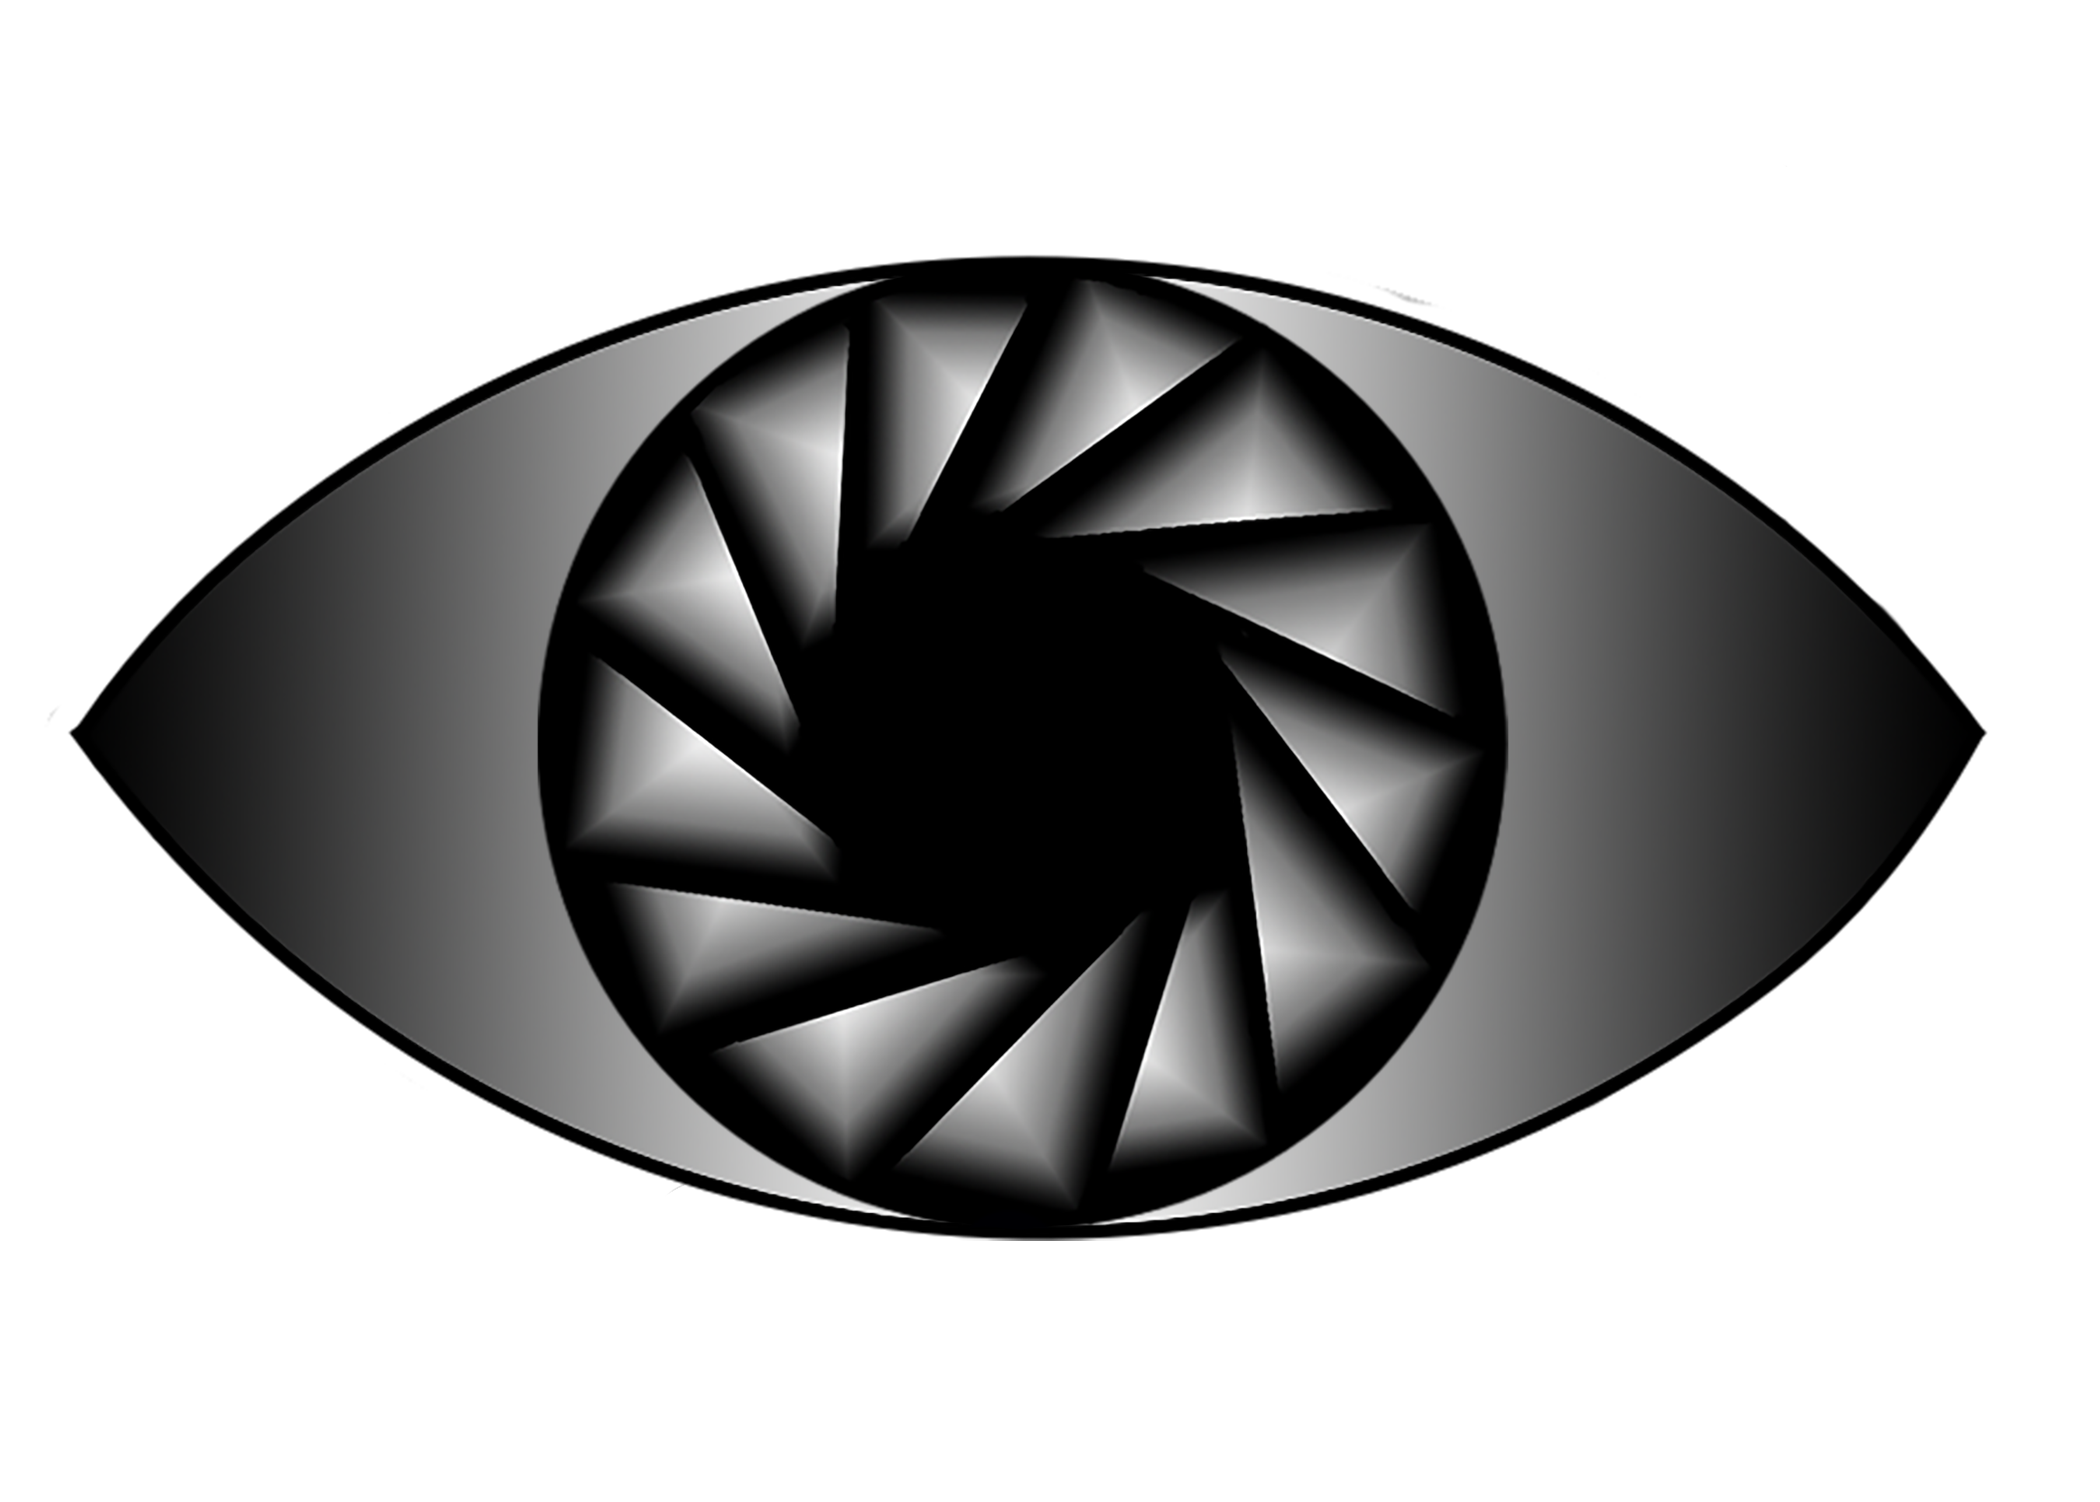 Steadi Eye Productions LLC